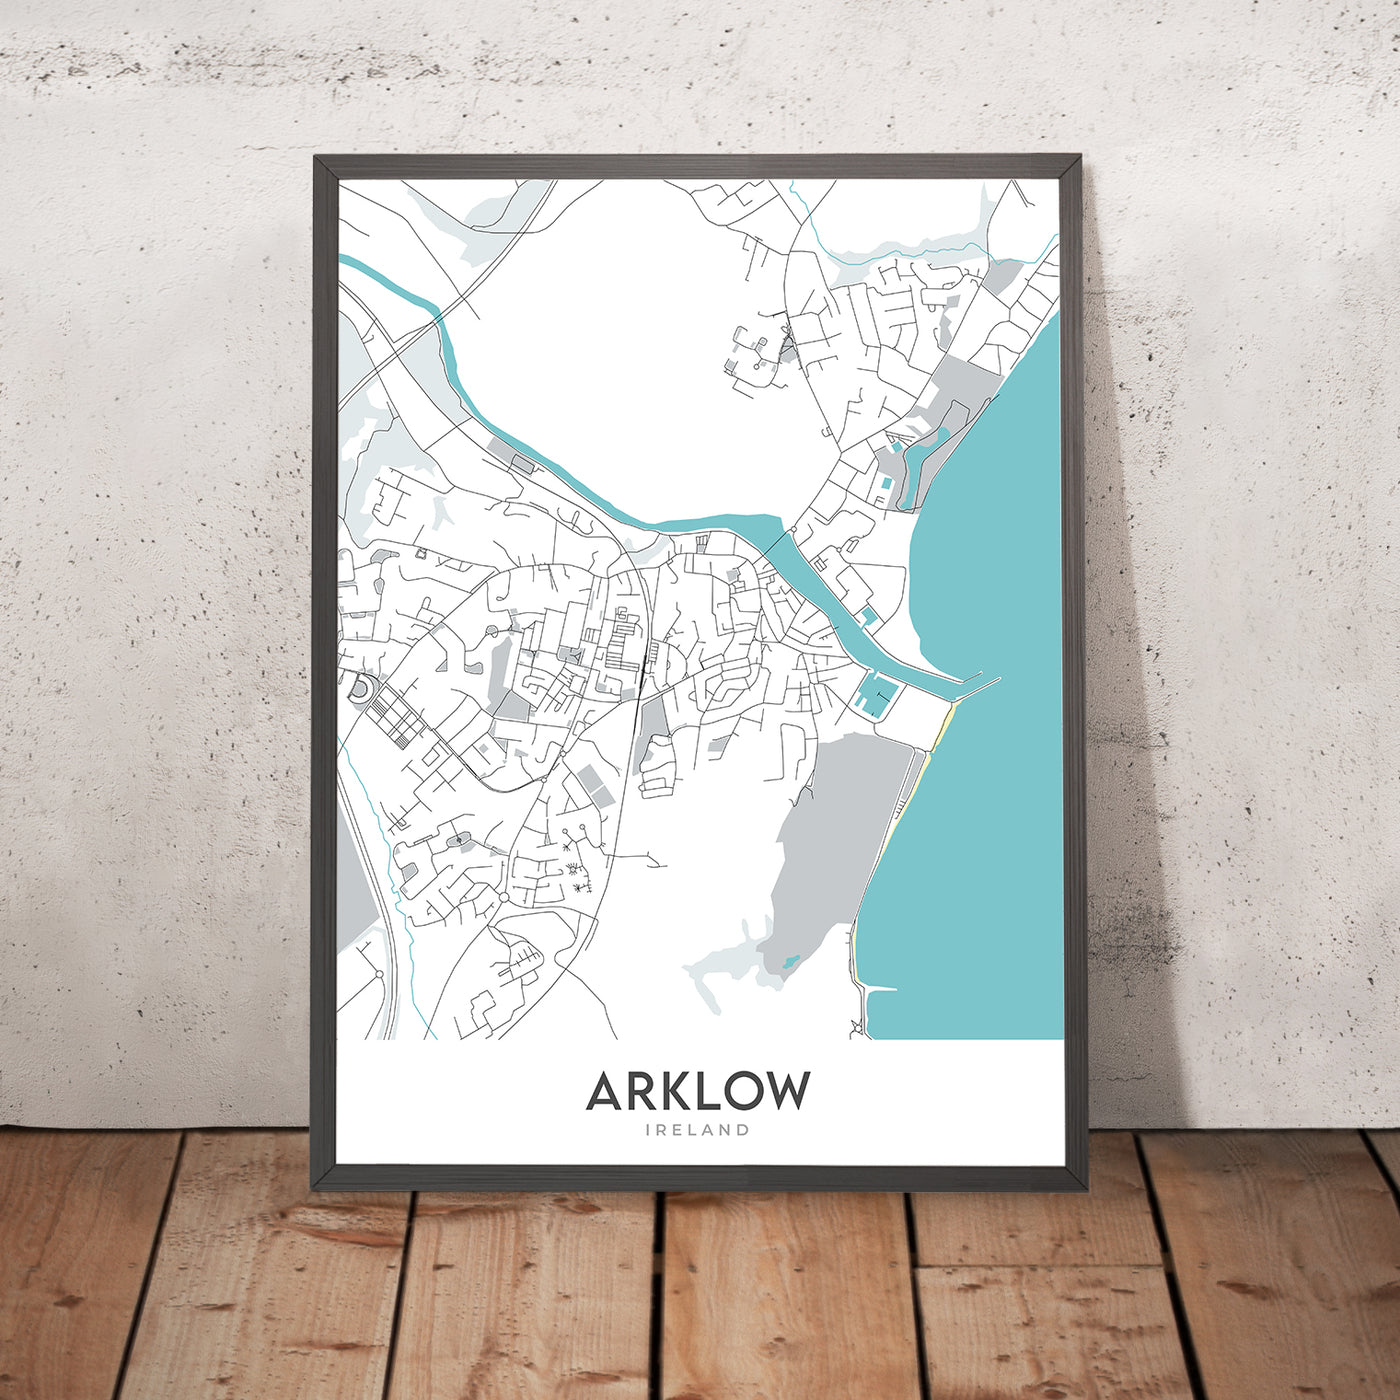 Moderner Stadtplan von Arklow, Irland: Arklow Castle, Arklow Harbour, Arklow Lighthouse, Avoca Mines, Ballyarthur House